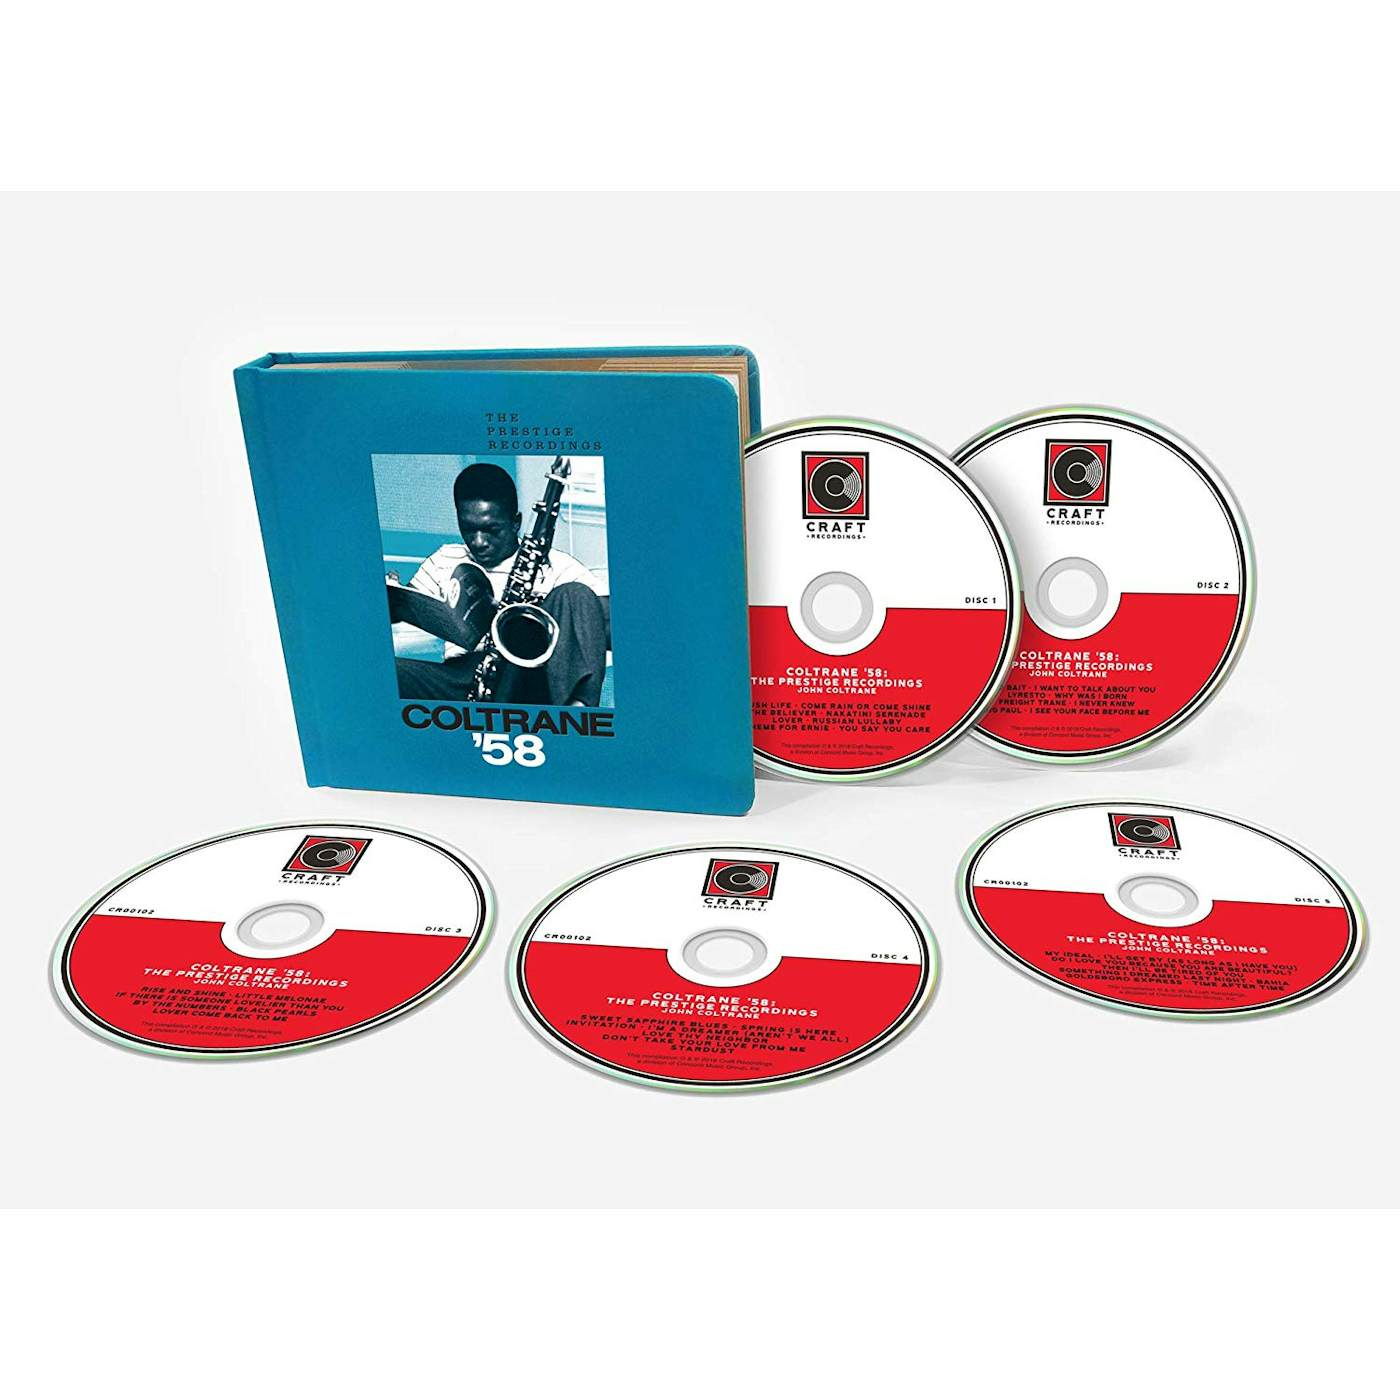 John Coltrane COLTRANE 58: PRESTIGE RECORDINGS CD